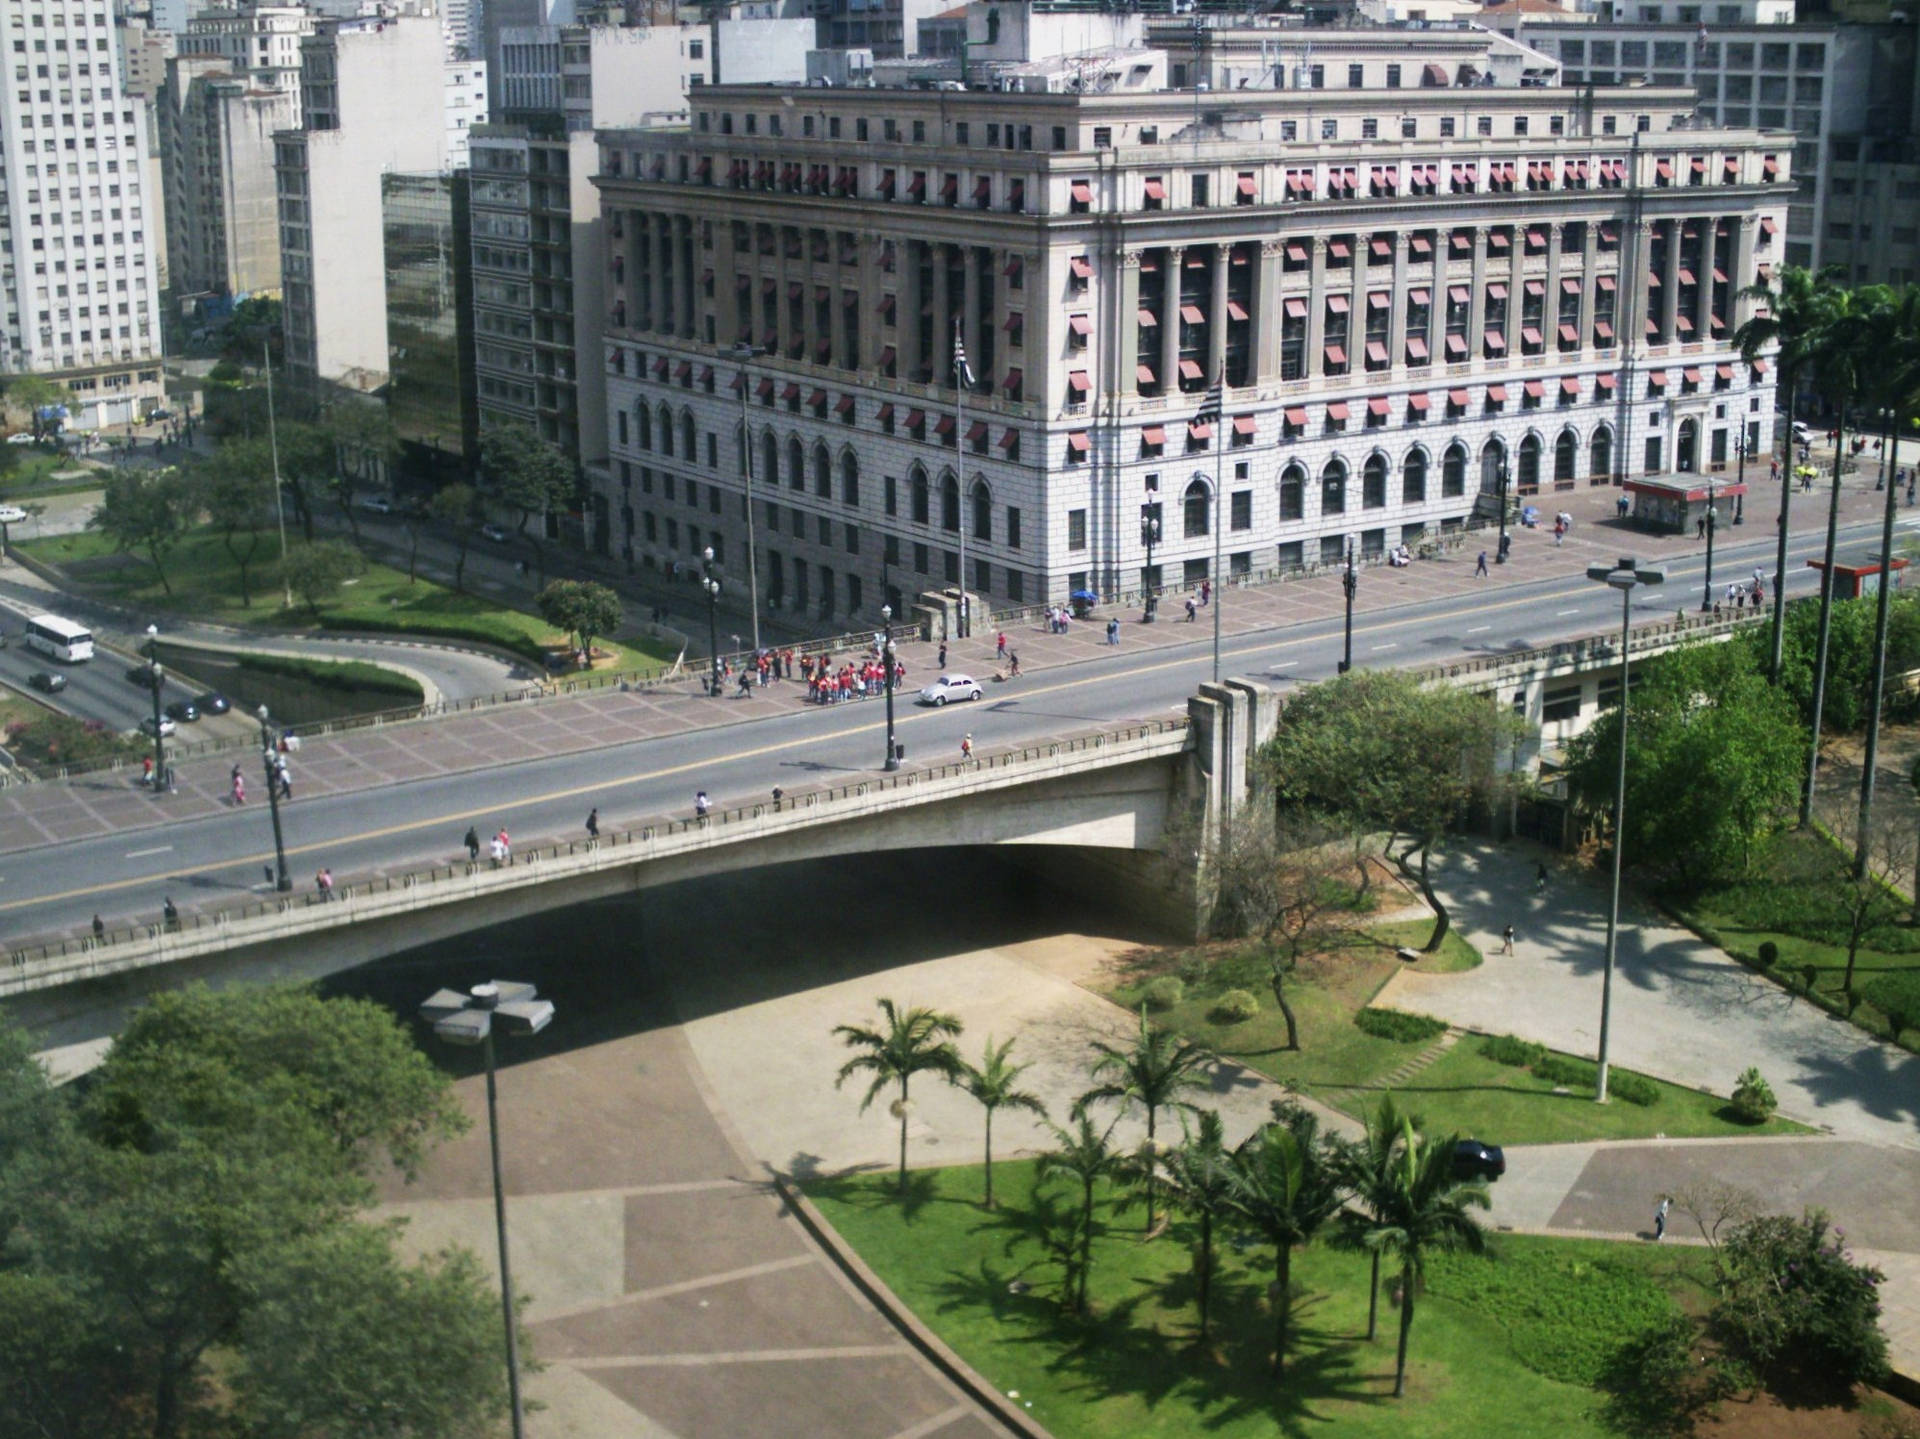 Viaduto Do Cha Sao Paulo Brazil Aerial Background